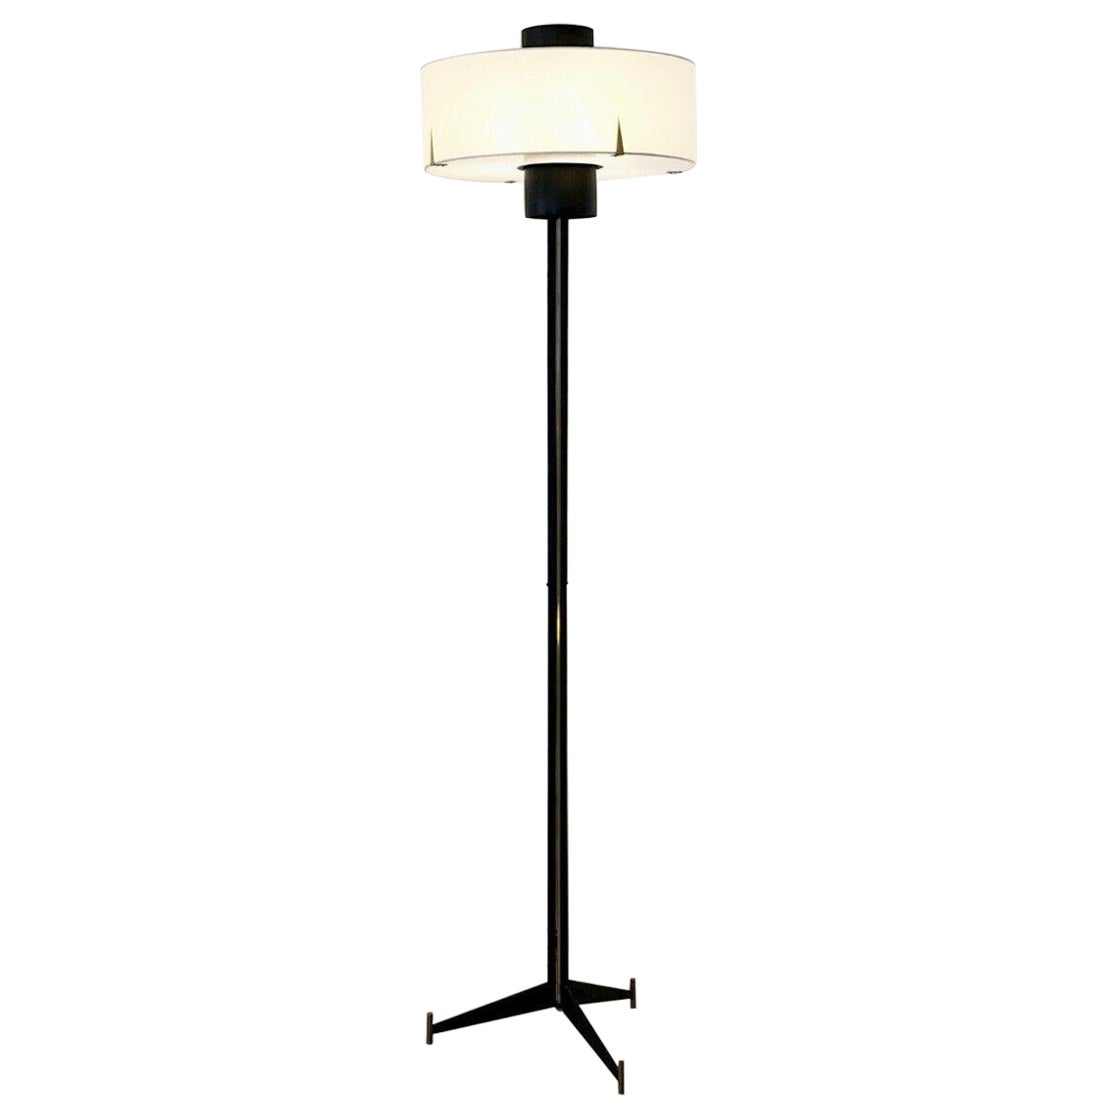 A MID-CENTURY-MODERN MODERNIST Tripod FLOOR LAMP by MAISON ARLUS, France 1950